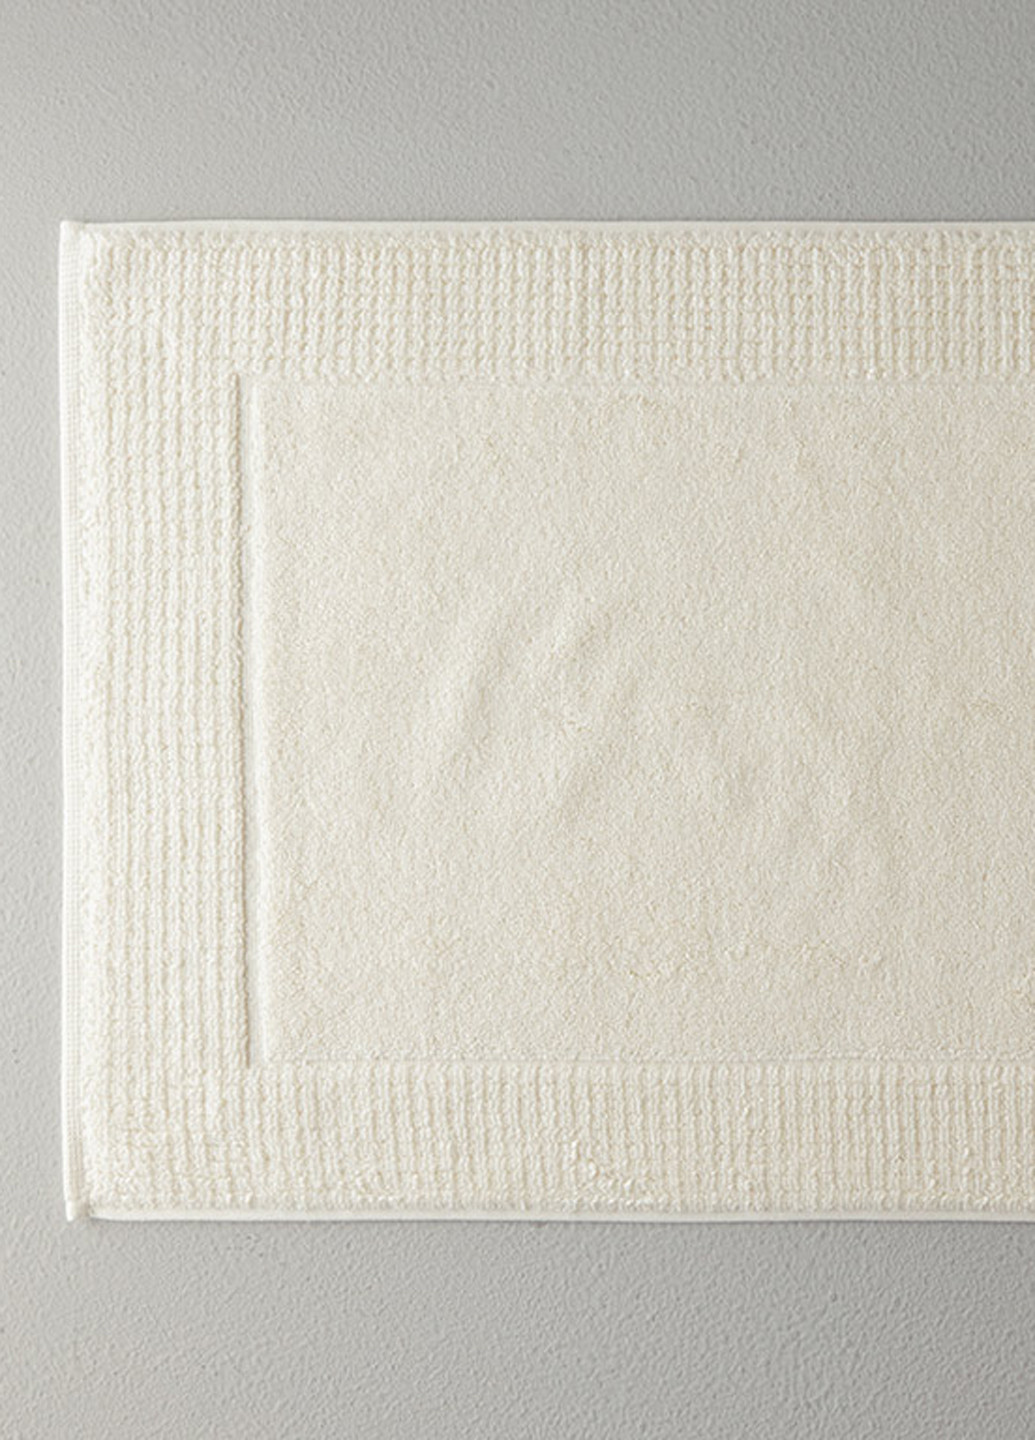 English Home полотенце для ног, 50х70 см однотонный молочный производство - Турция